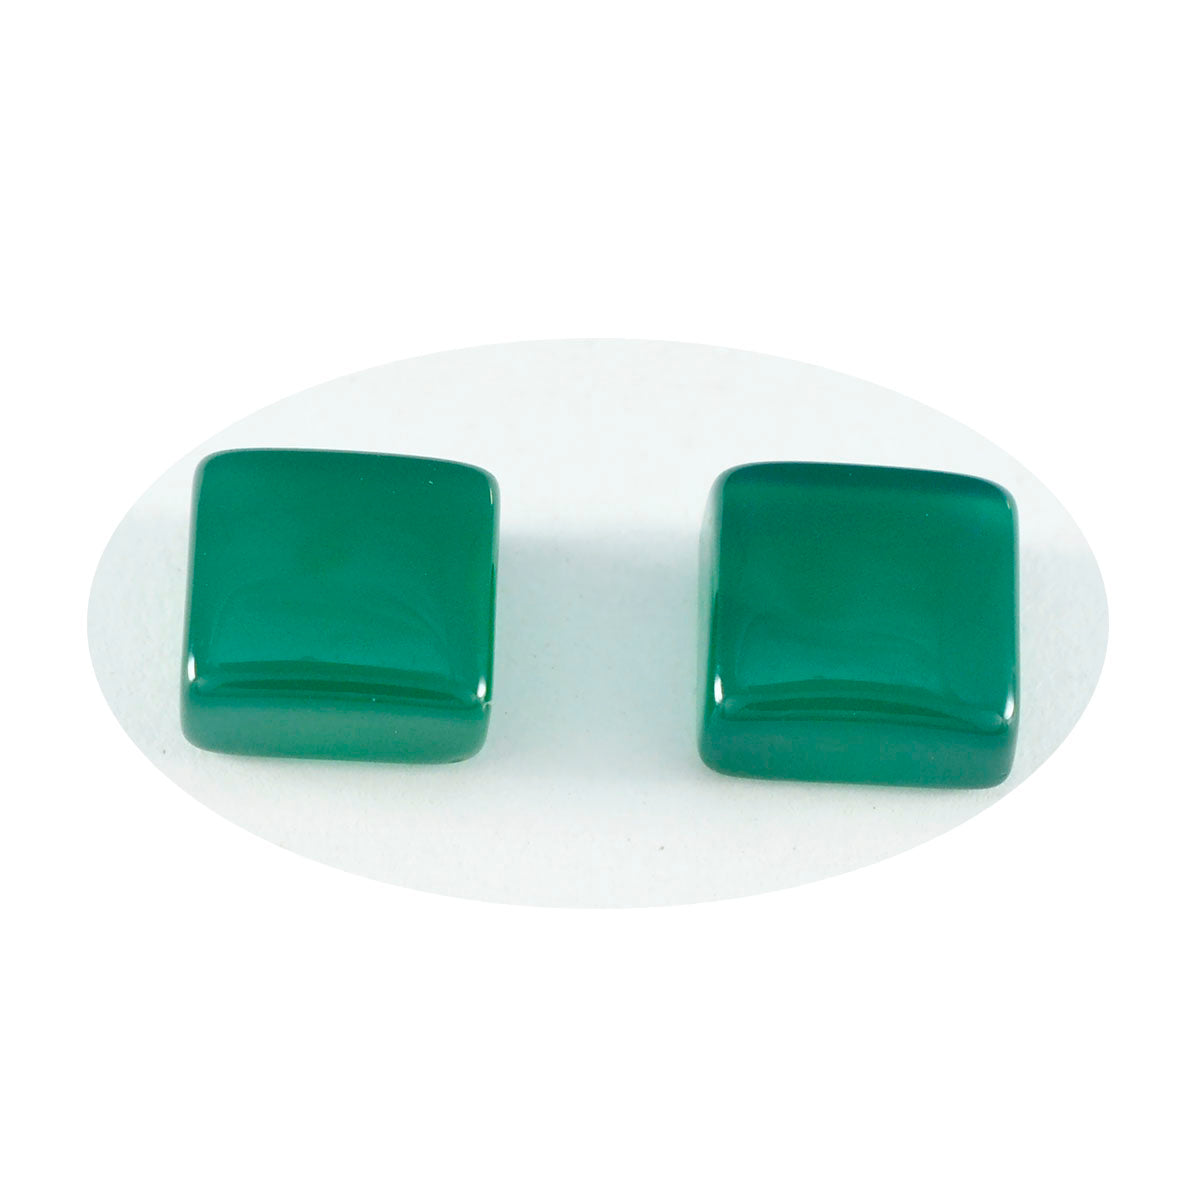 Riyogems 1PC Green Onyx Cabochon 14x14 mm Square Shape excellent Quality Loose Gems